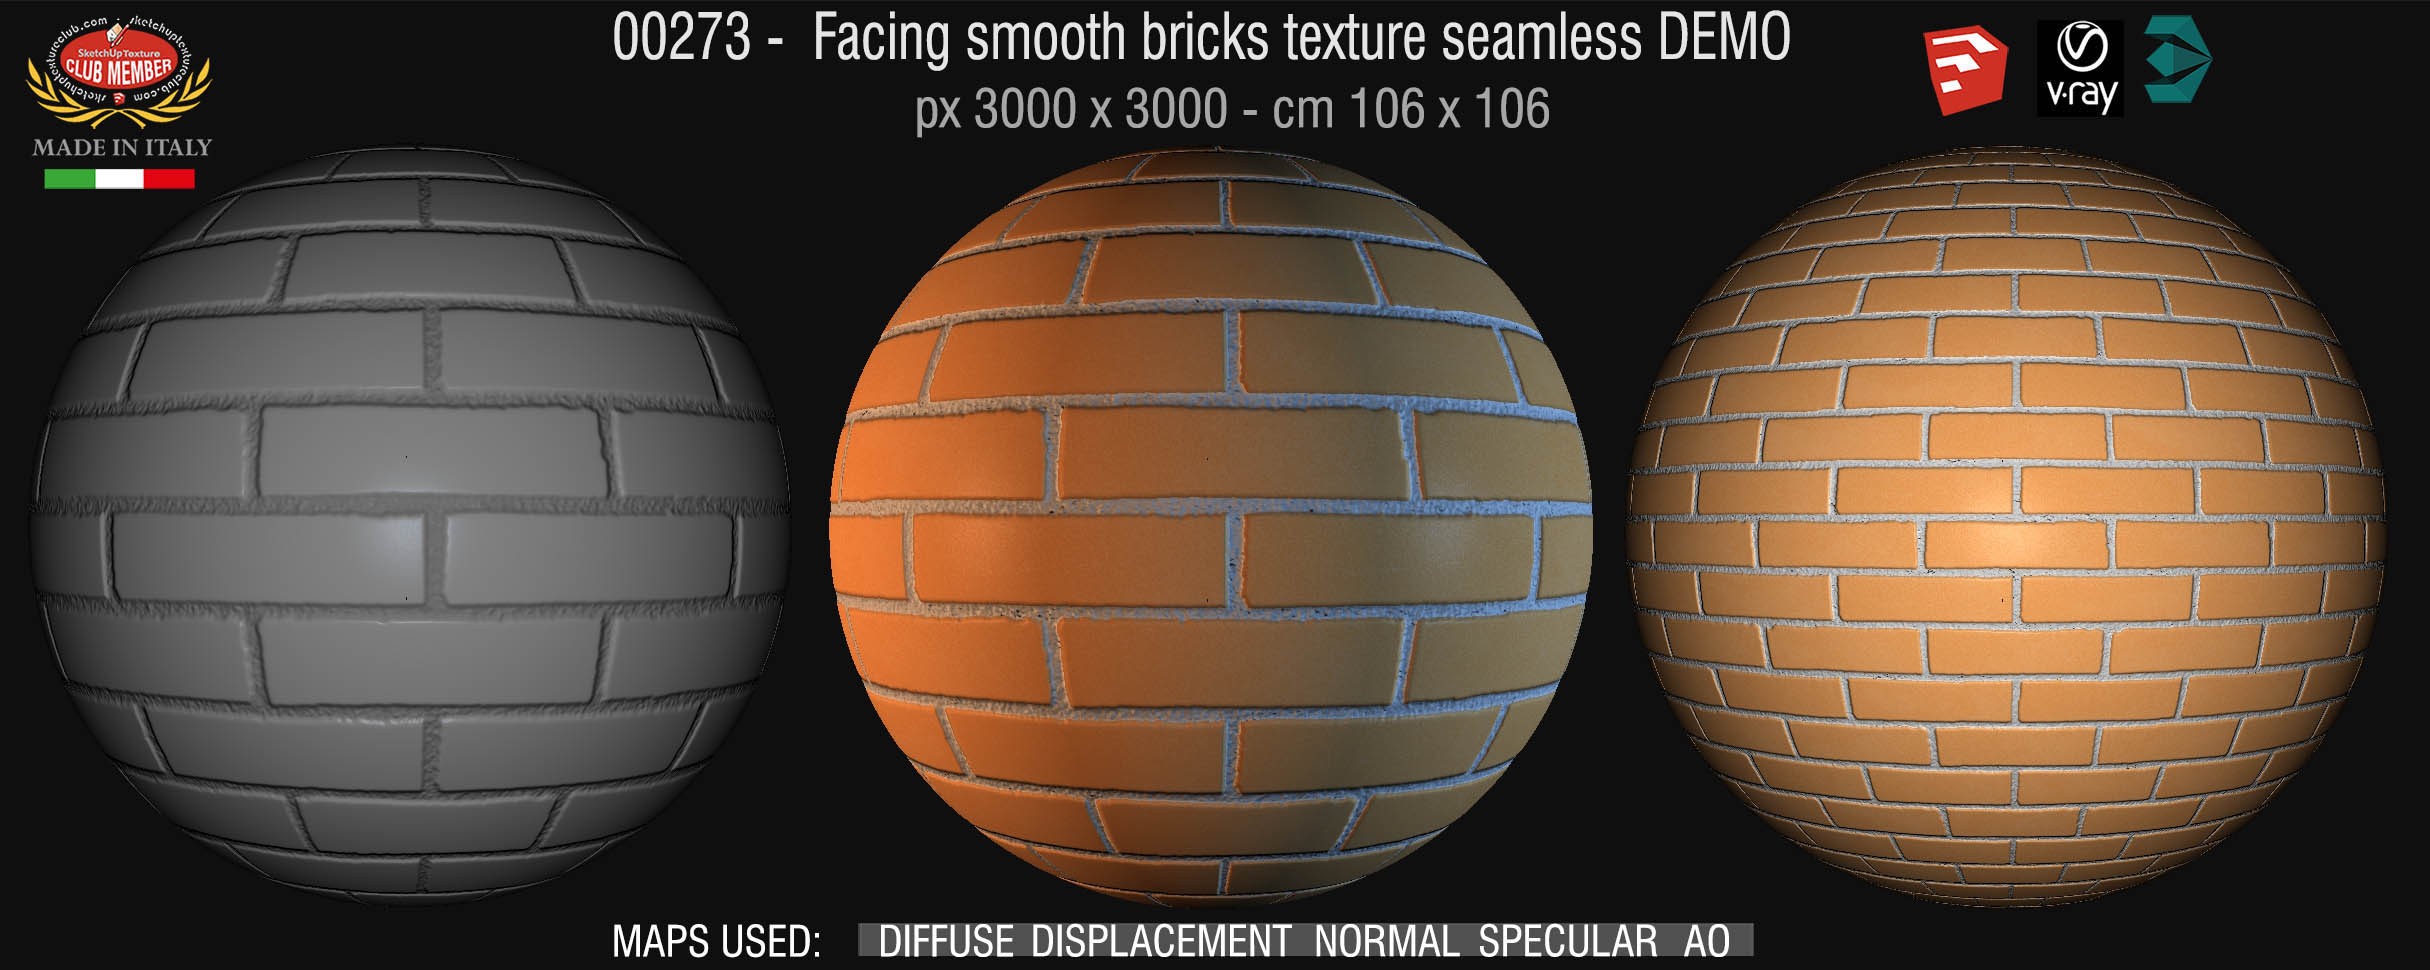 00273 Facing smooth bricks texture seamless + maps DEMO